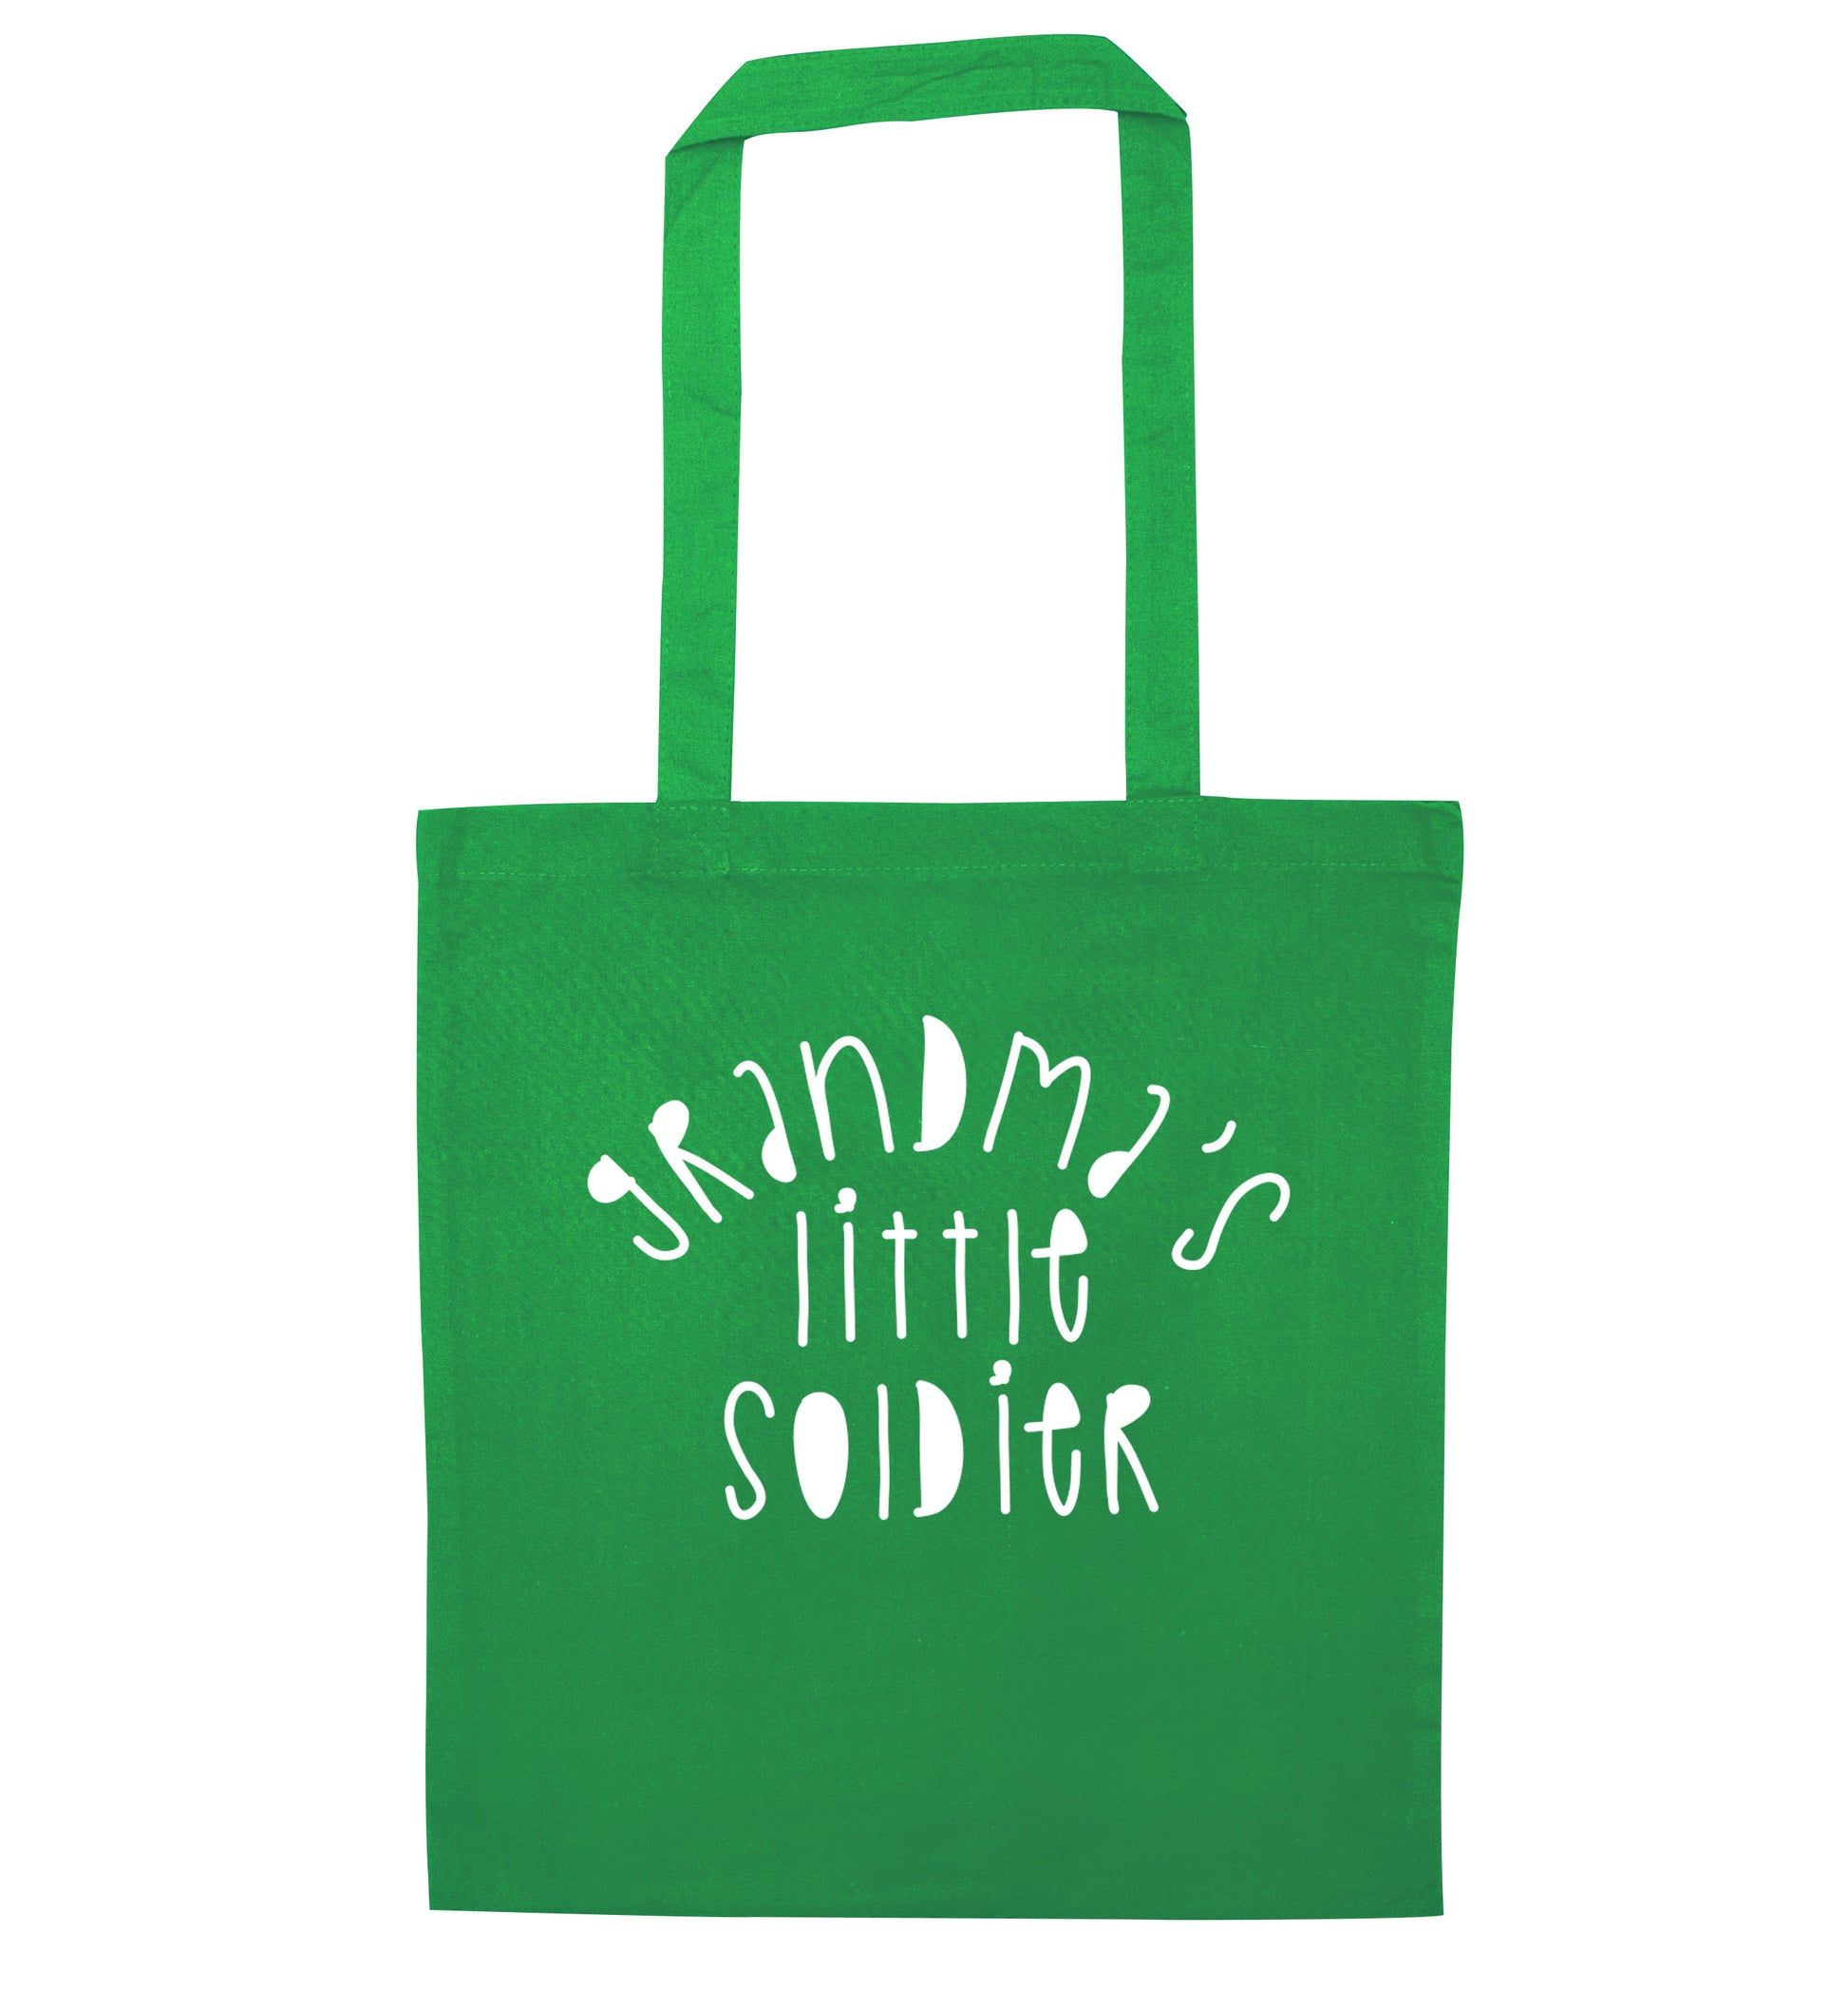 Grandma's little soldier green tote bag